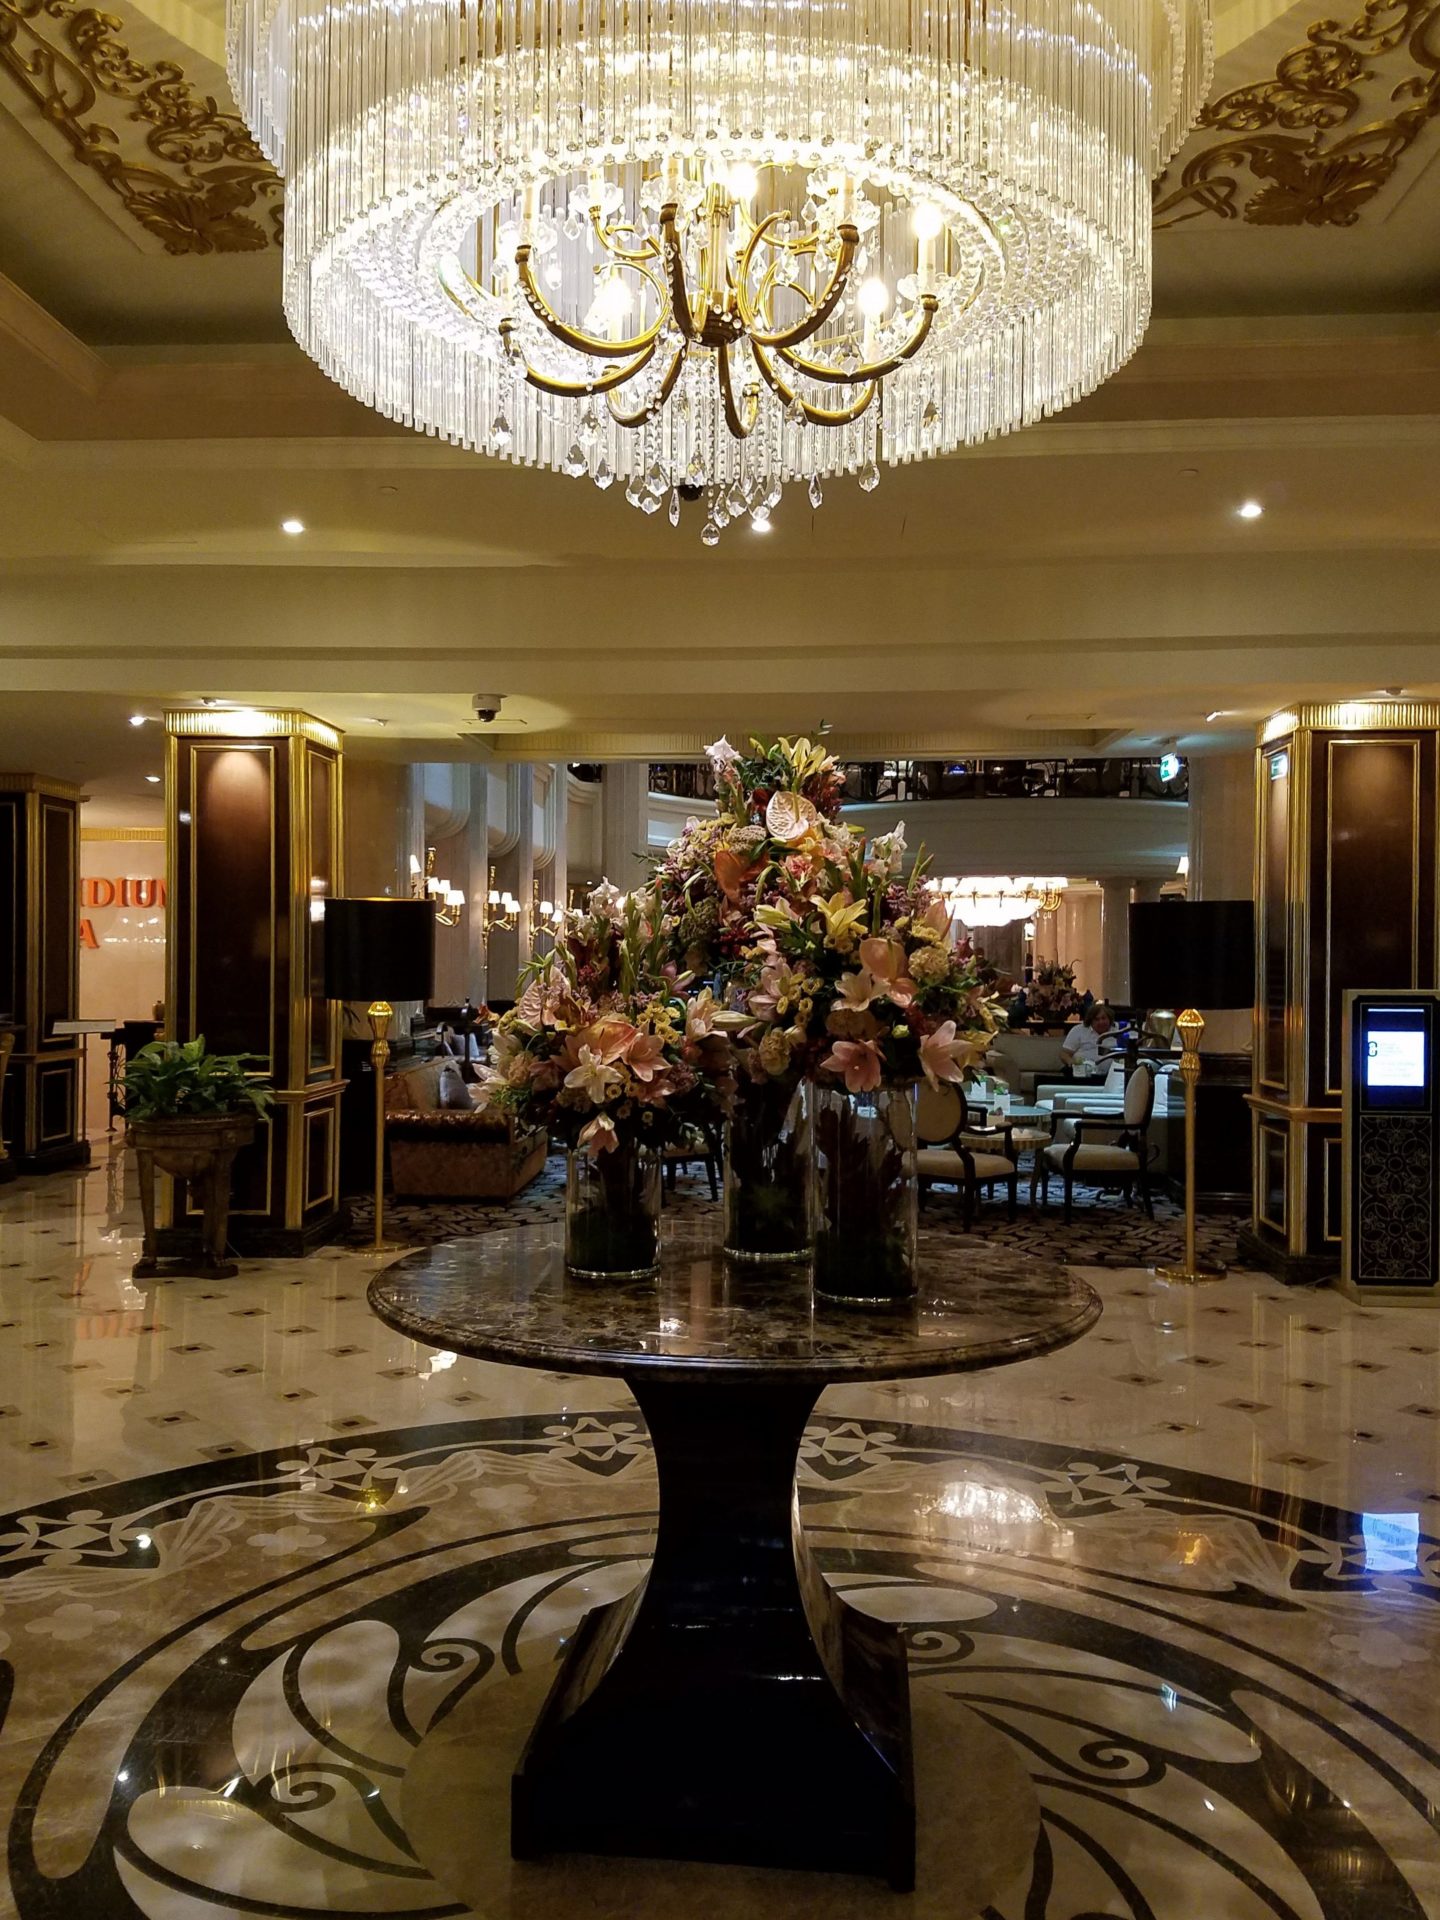 a chandelier in a hotel lobby